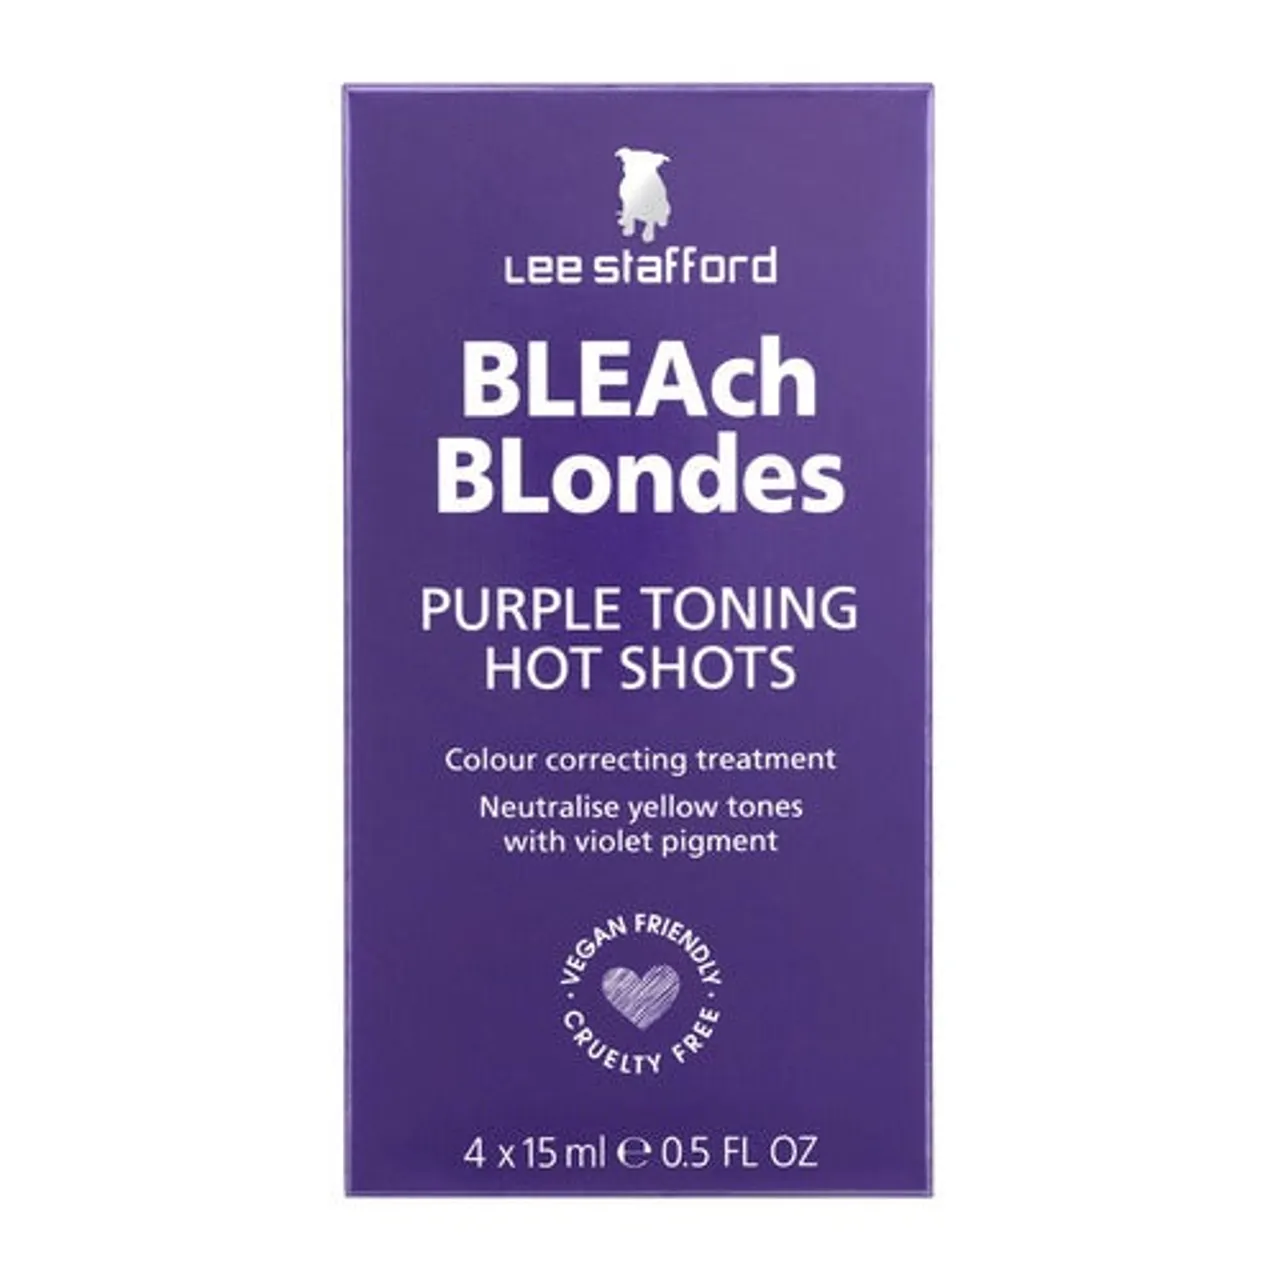 Lee Stafford Bleach Blondes Purple Toning Hot Shot Treatment 4 x 15 ml